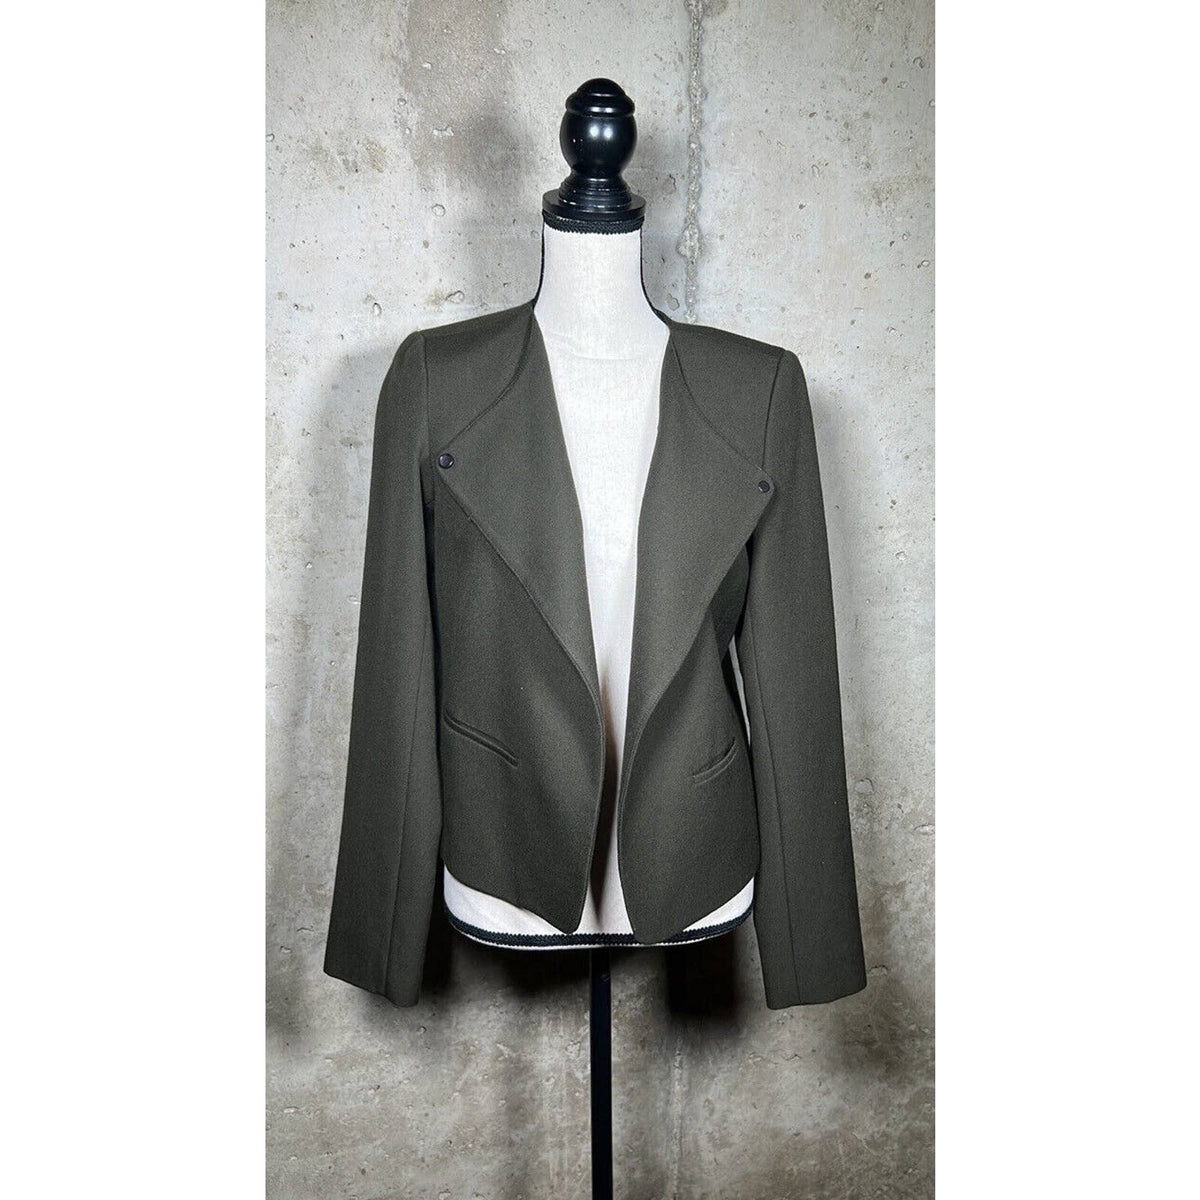 Vince Green 100% Wool Blazer Jacket Sz.8